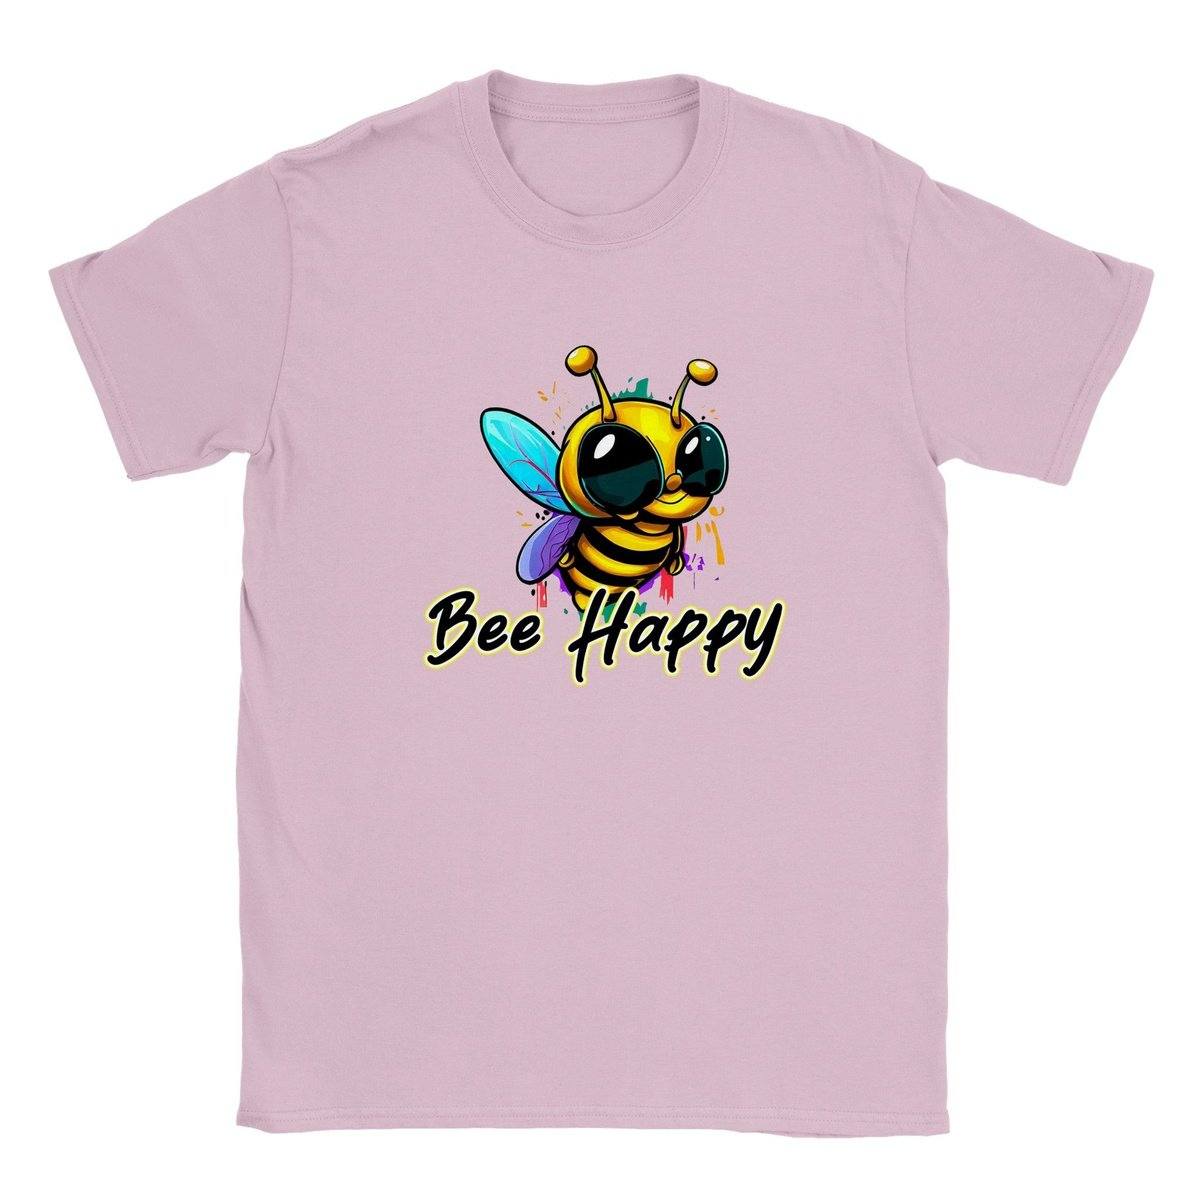 Bee Happy Kids T-shirt Kids T-Shirts Light Pink / XS BC Australia